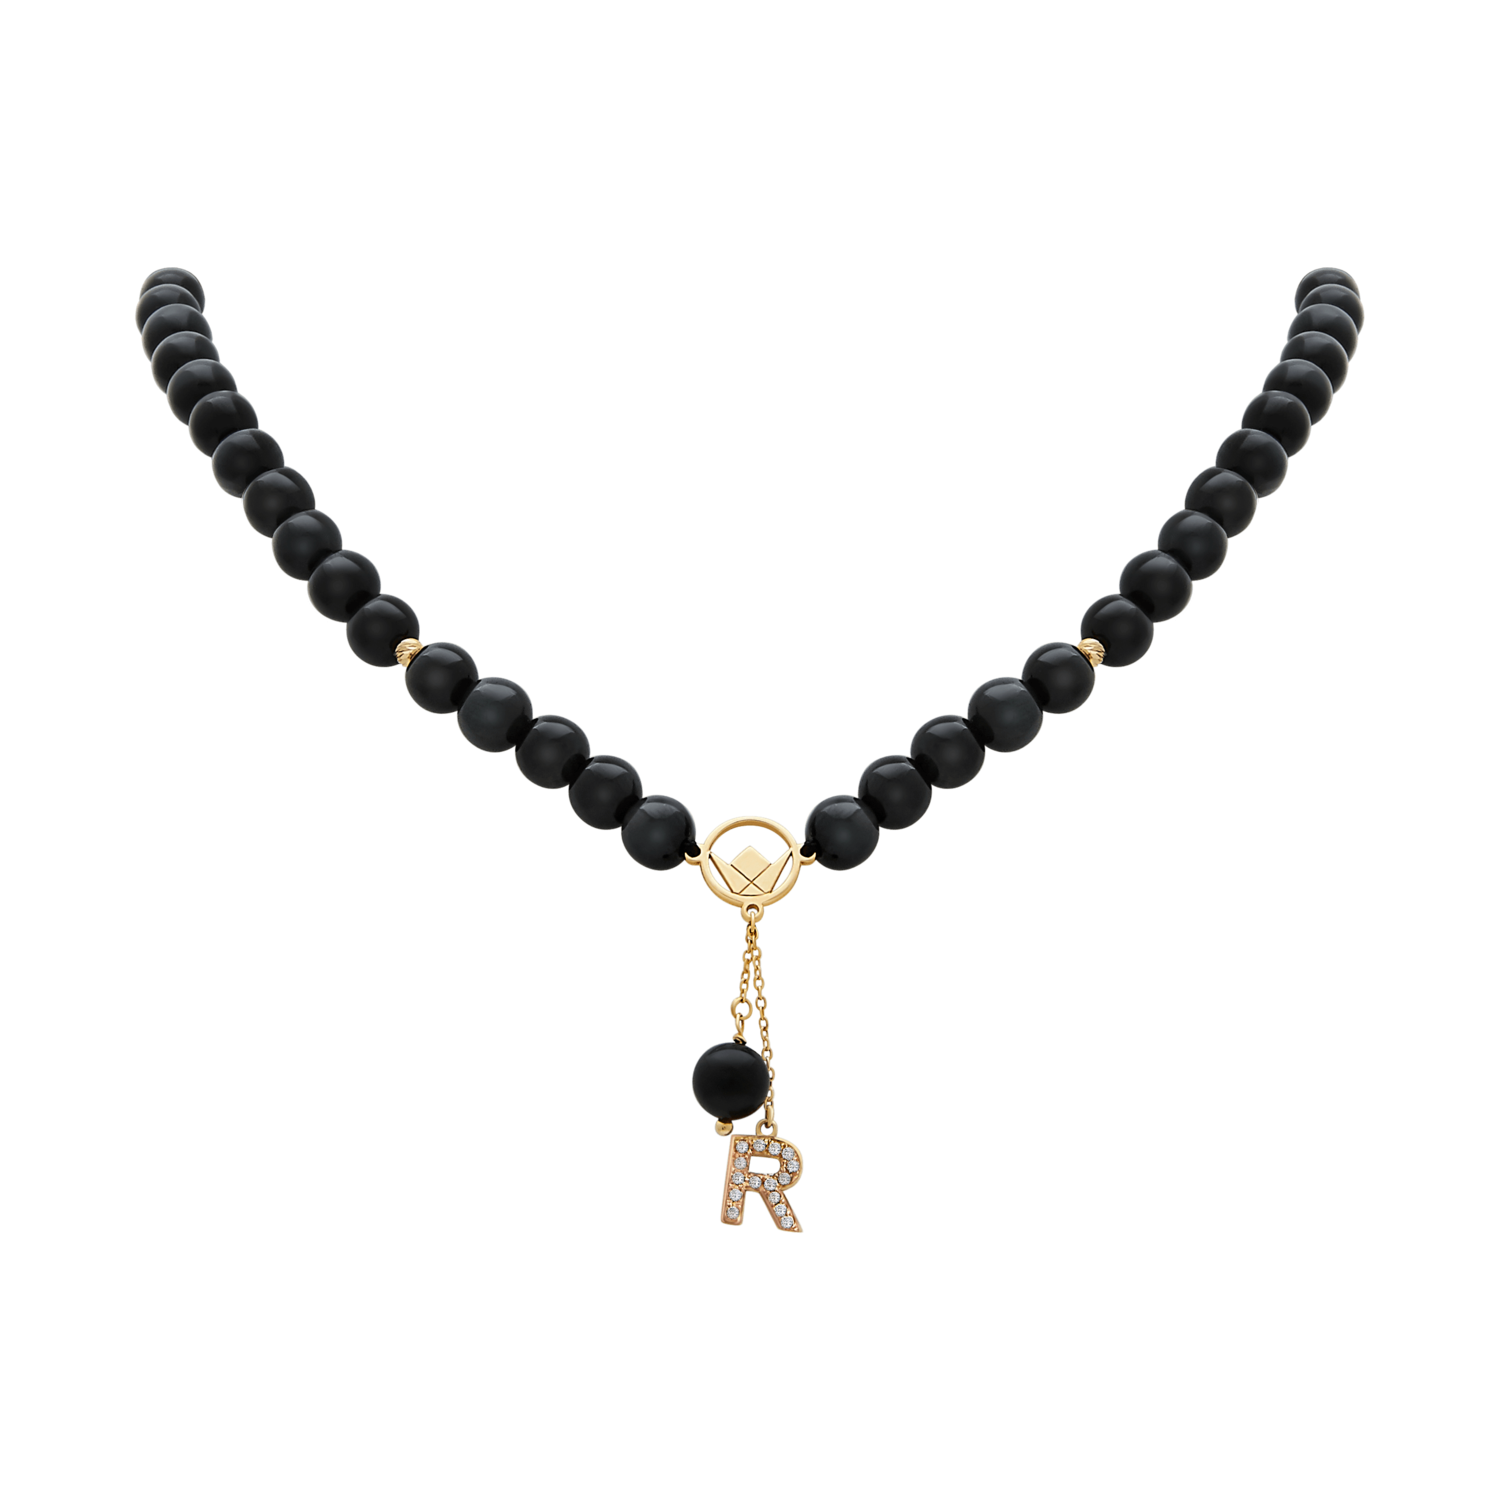 Initials Diamond Necklace with Precious Beads